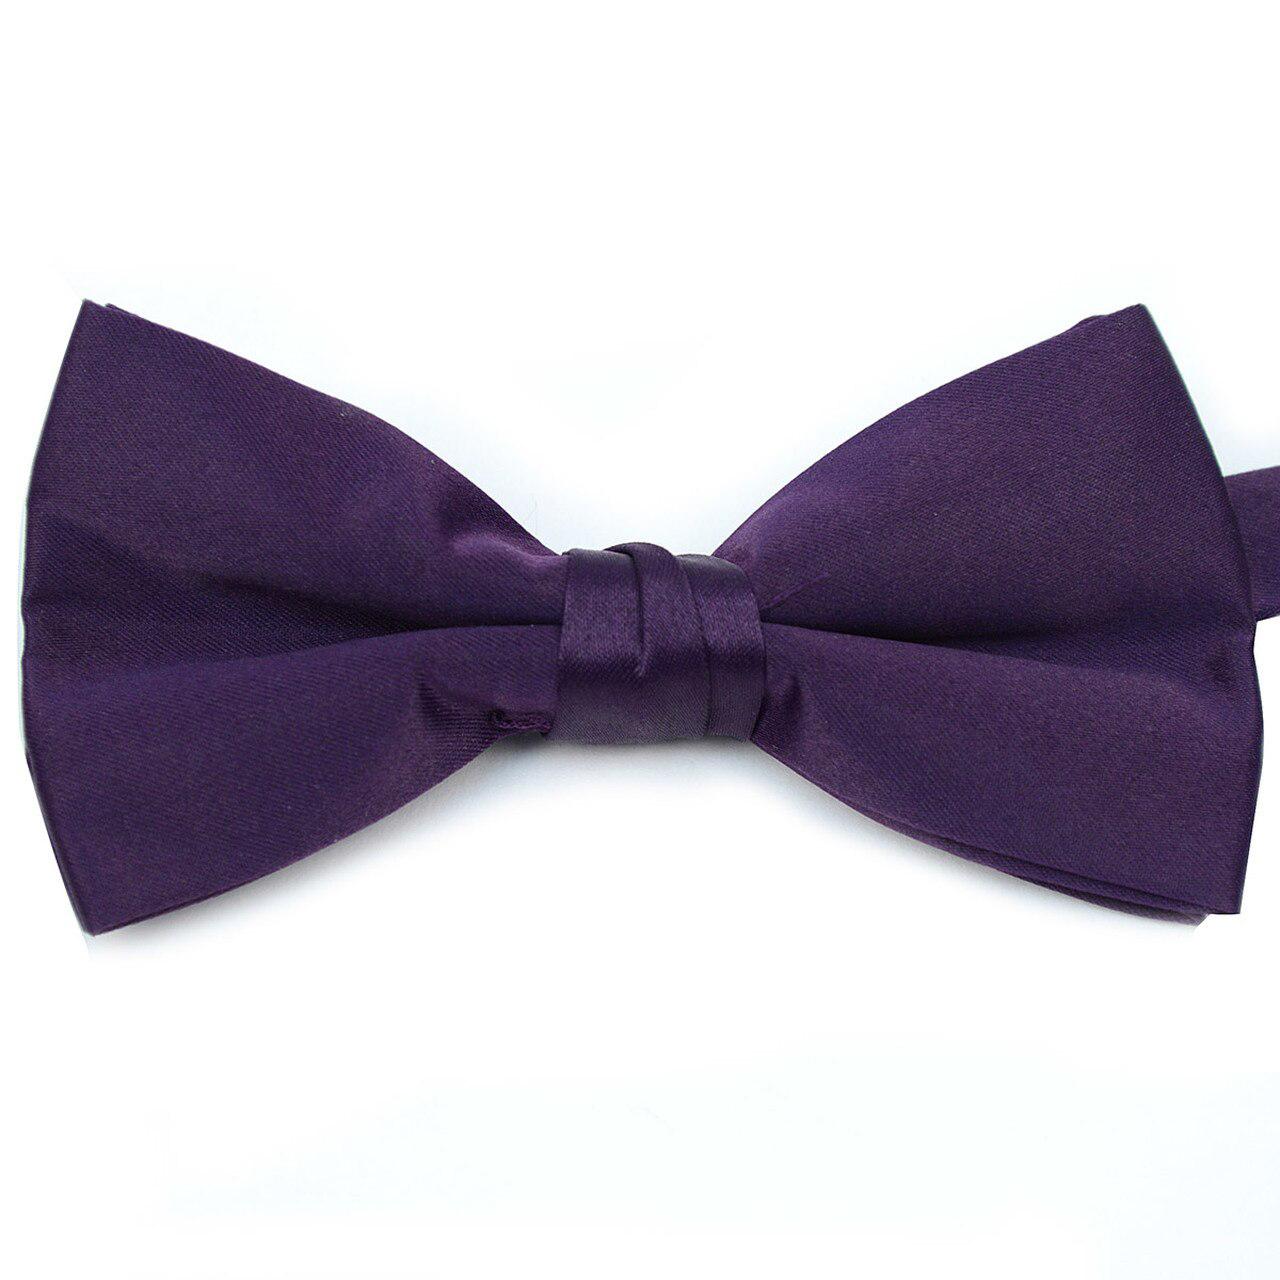  Solid Bow Tie Boxed - Dark Purple